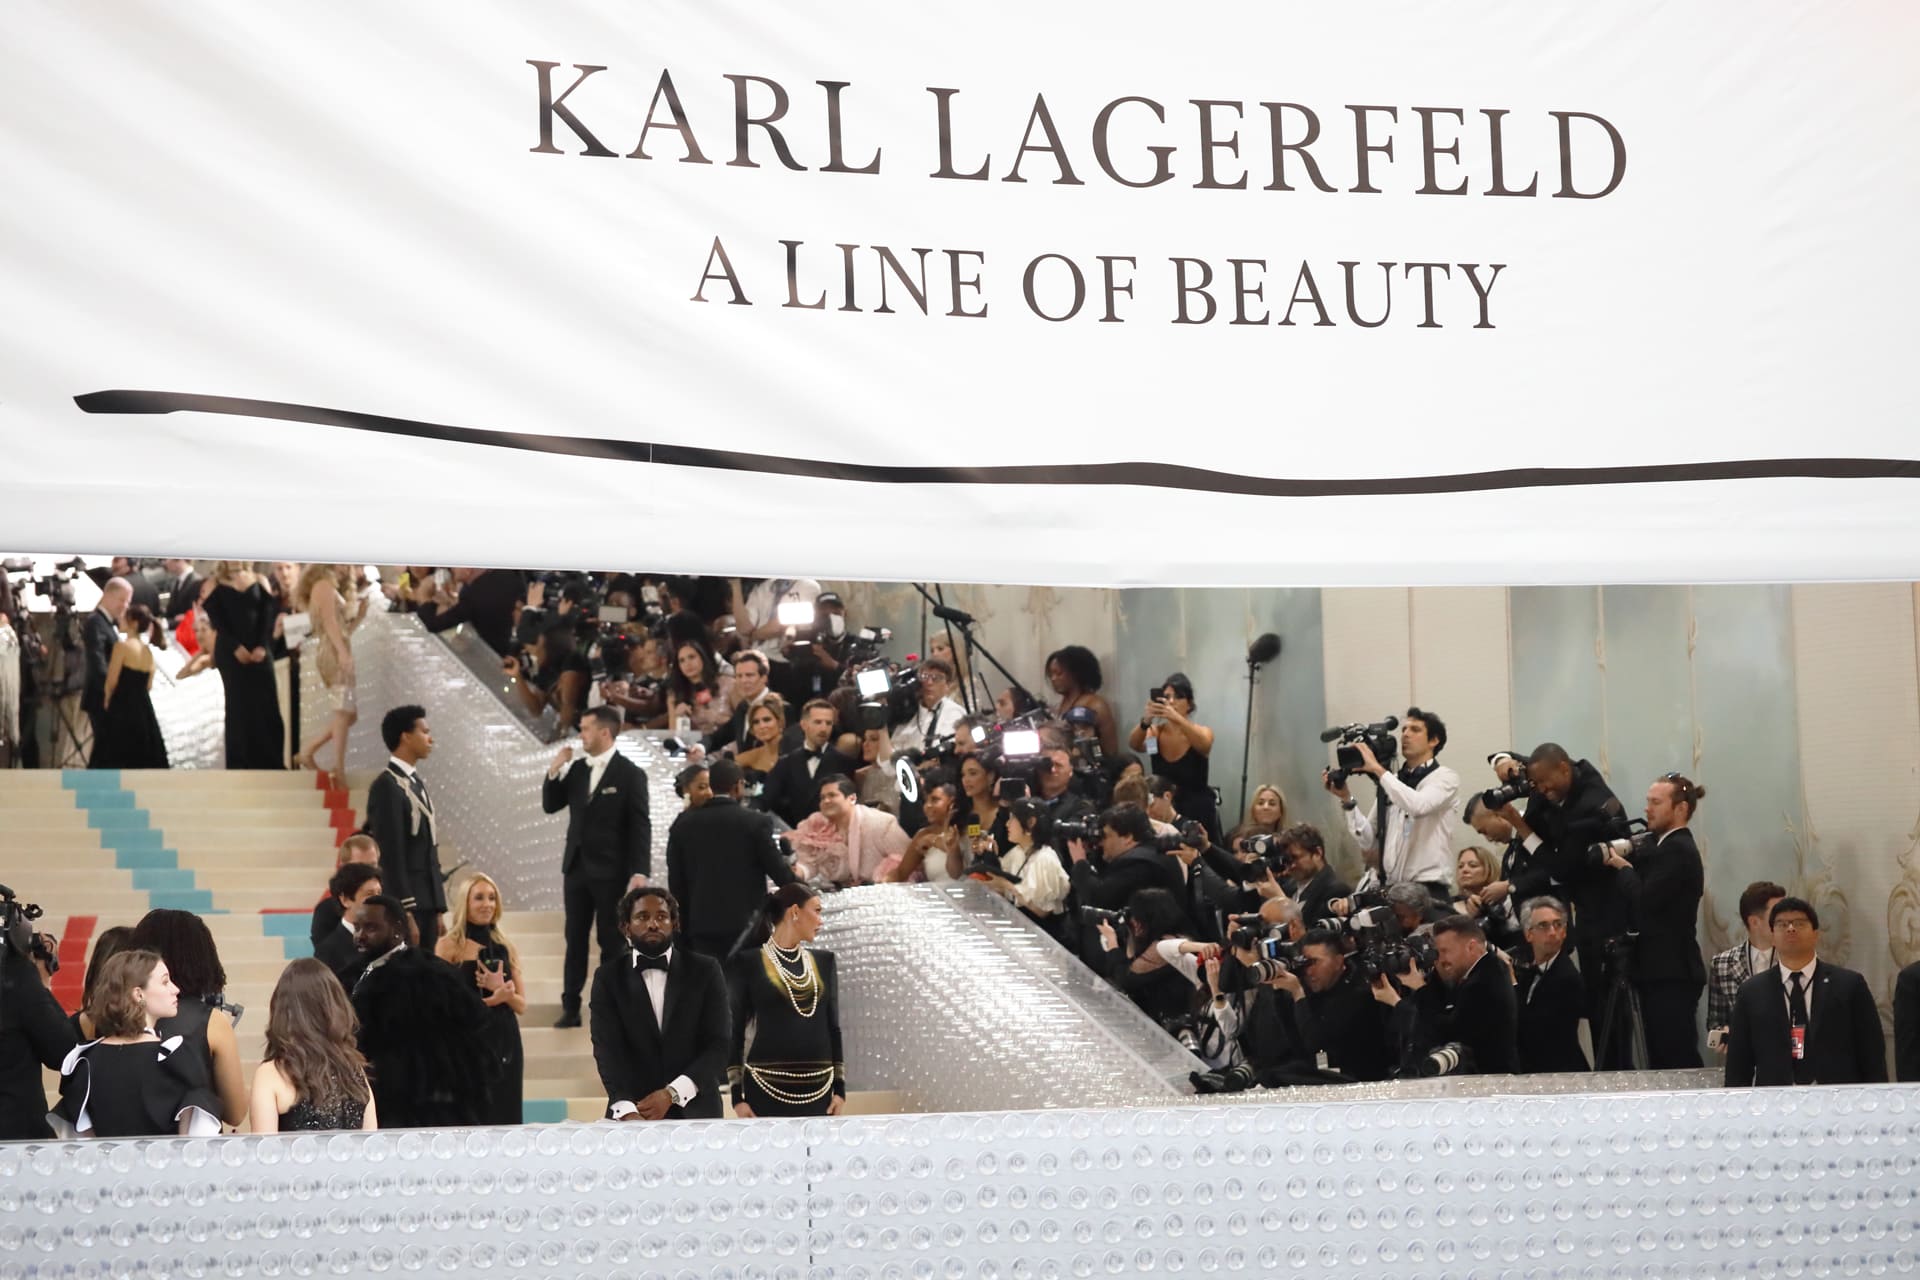 Met Gala 2023 Dress Code Explained: 'Karl Lagerfeld A Line of